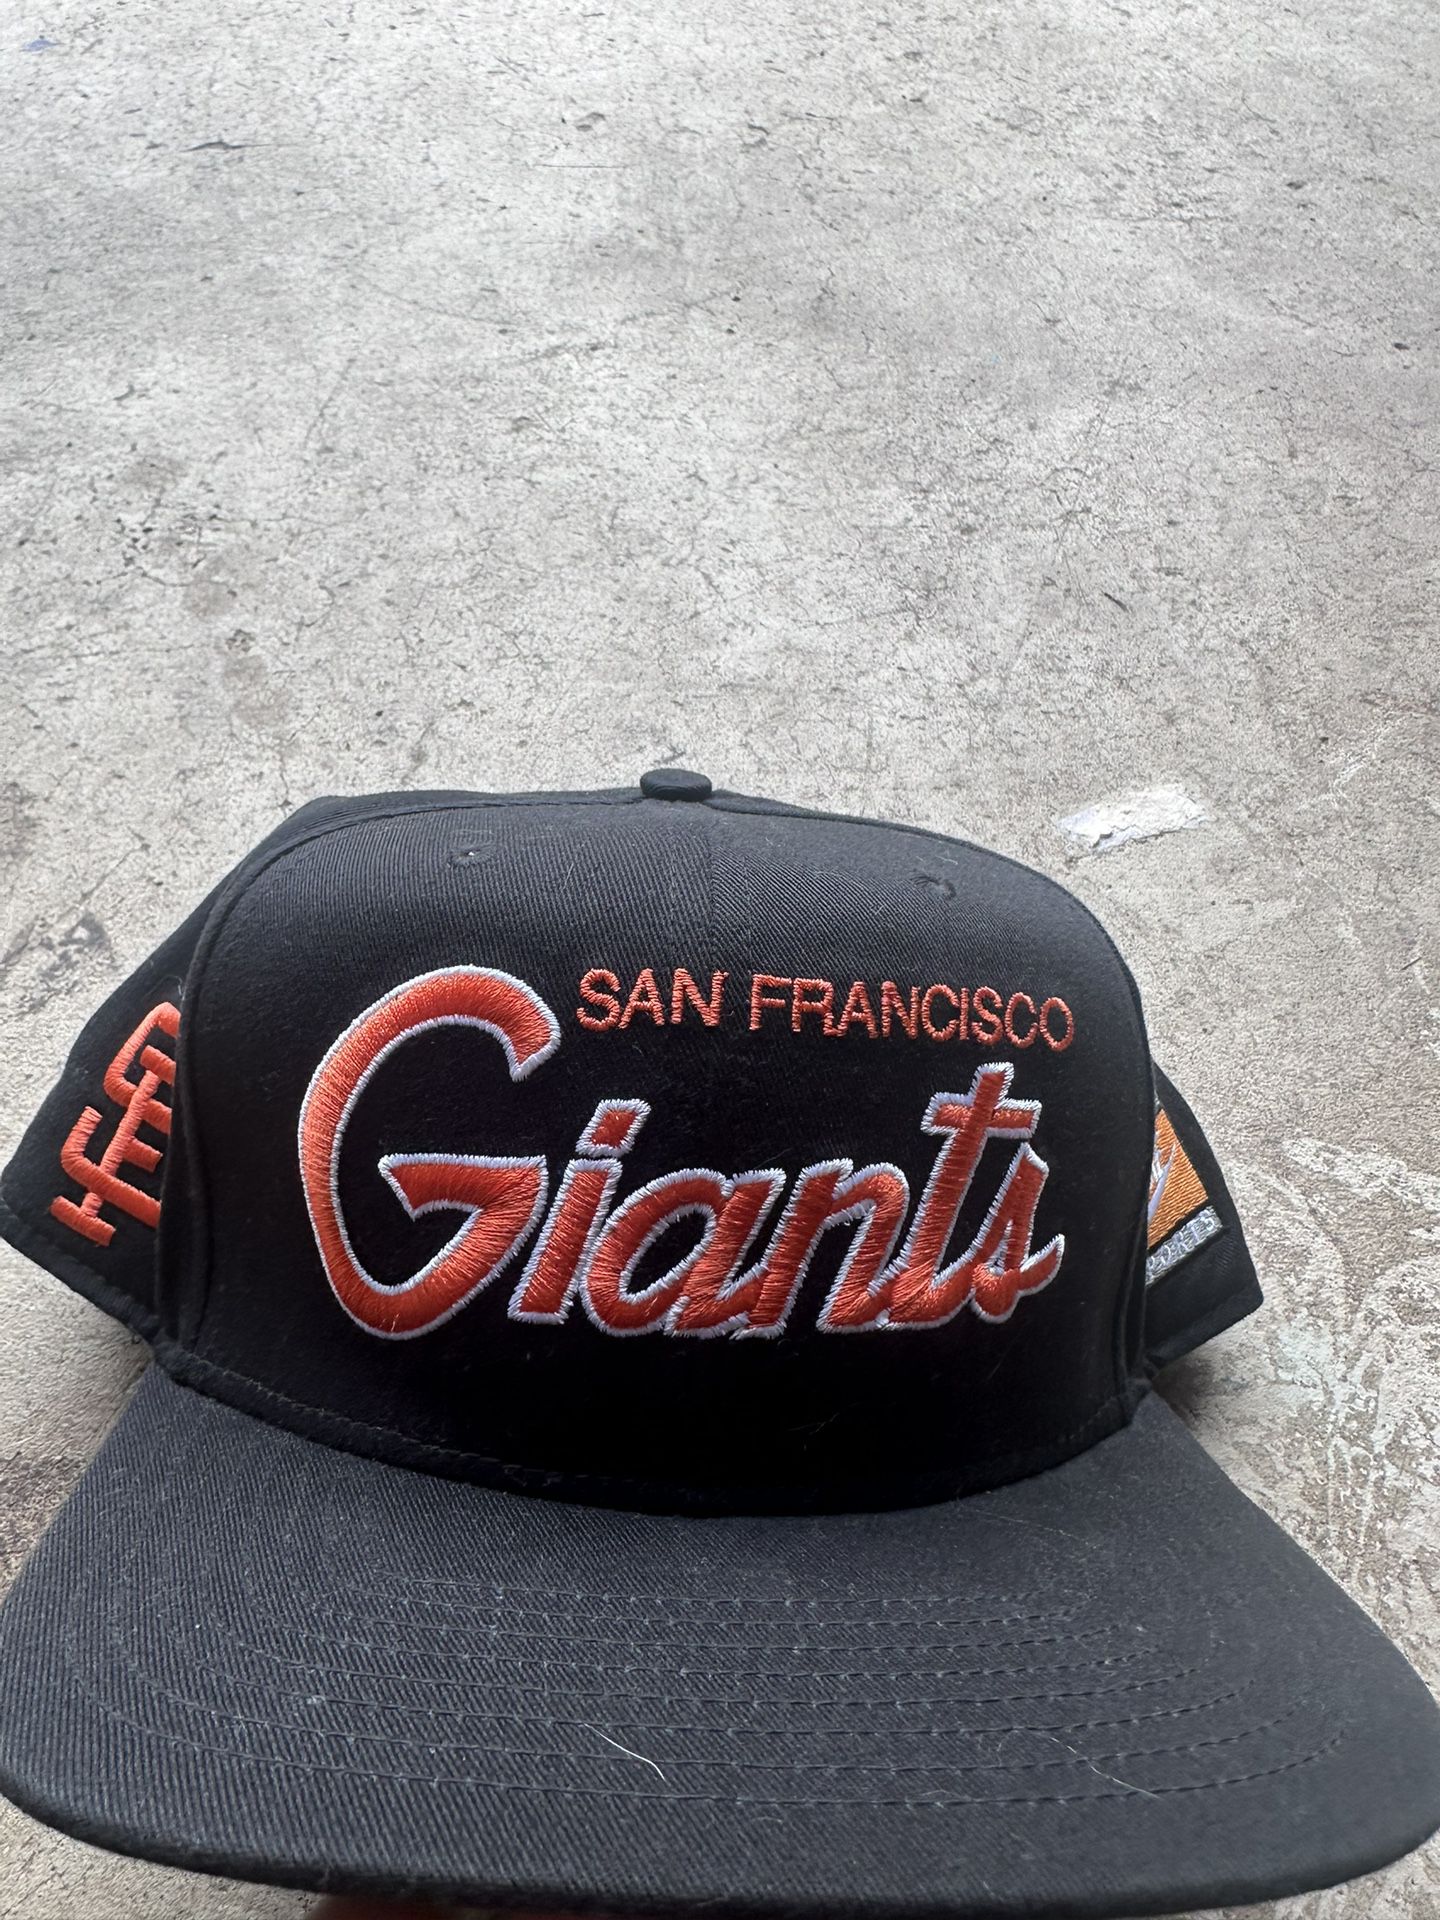 Vintage San Francisco, Giants